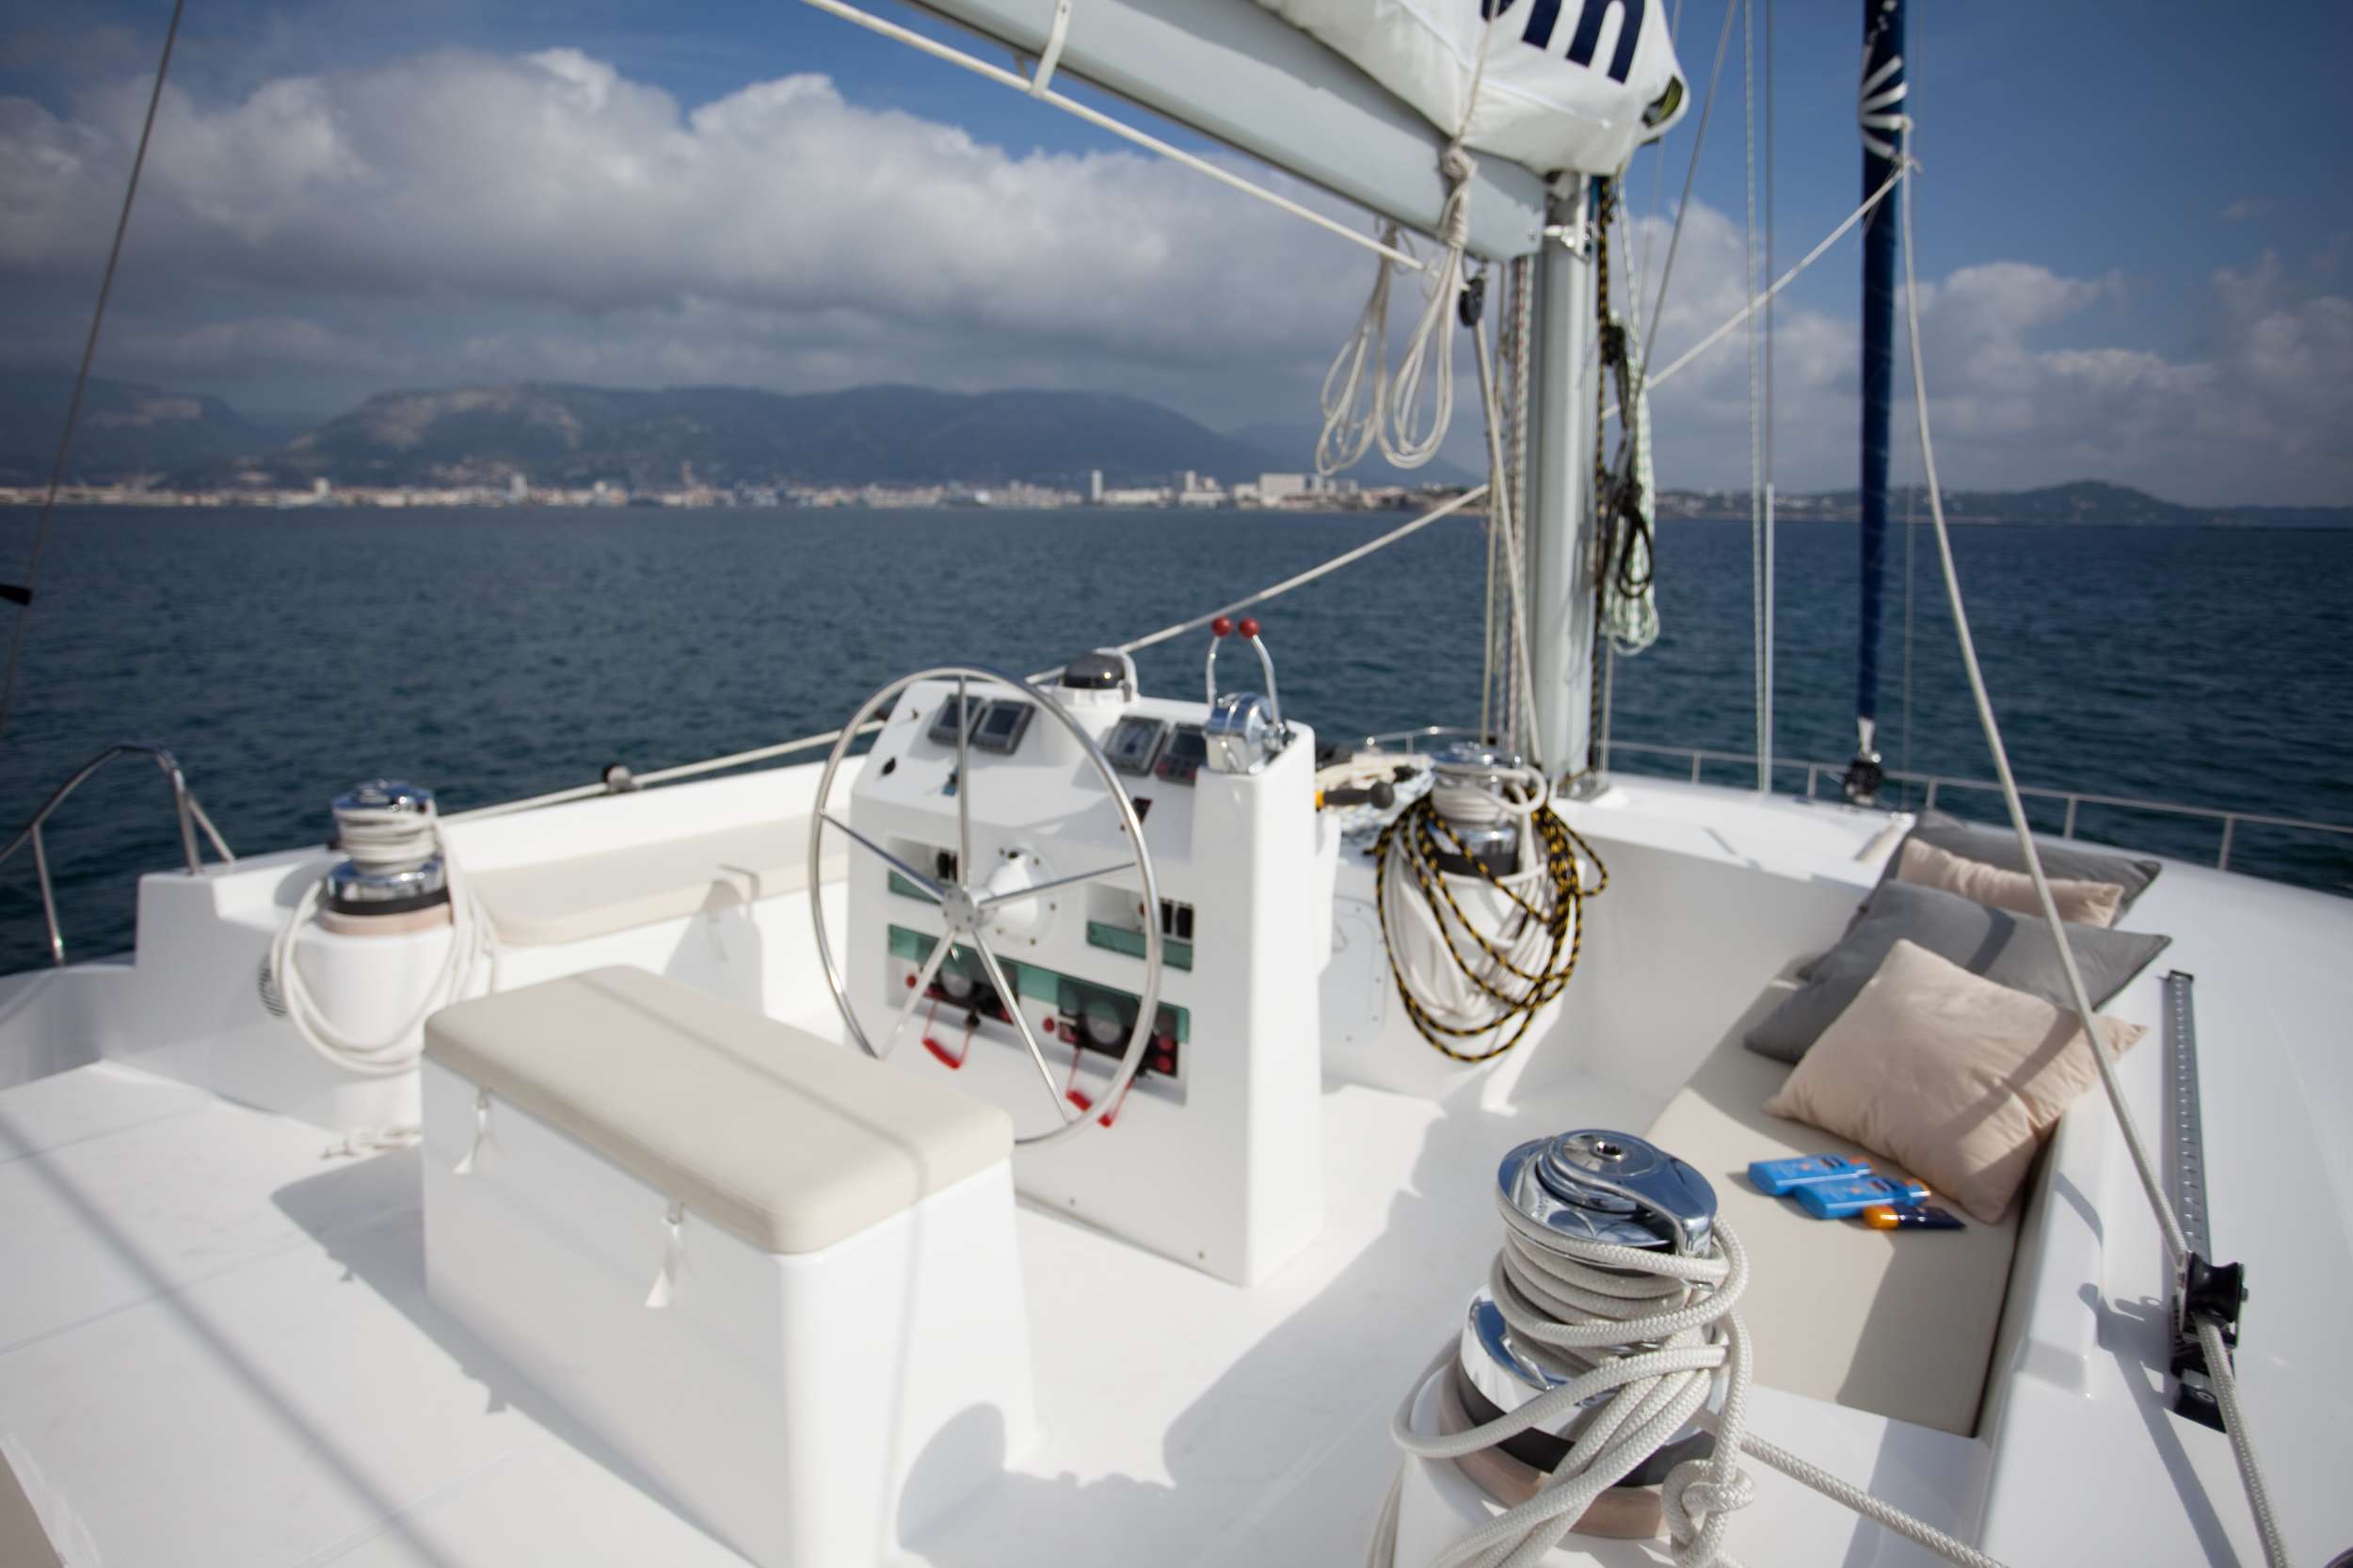 Dream 60 - Littr&eacute; &amp; Tauceti - Yacht Charter Langkawi & Boat hire in W. Med -Naples/Sicily, W. Med - Spain/Balearics, Croatia Bahamas, Indian Ocean and SE Asia 4